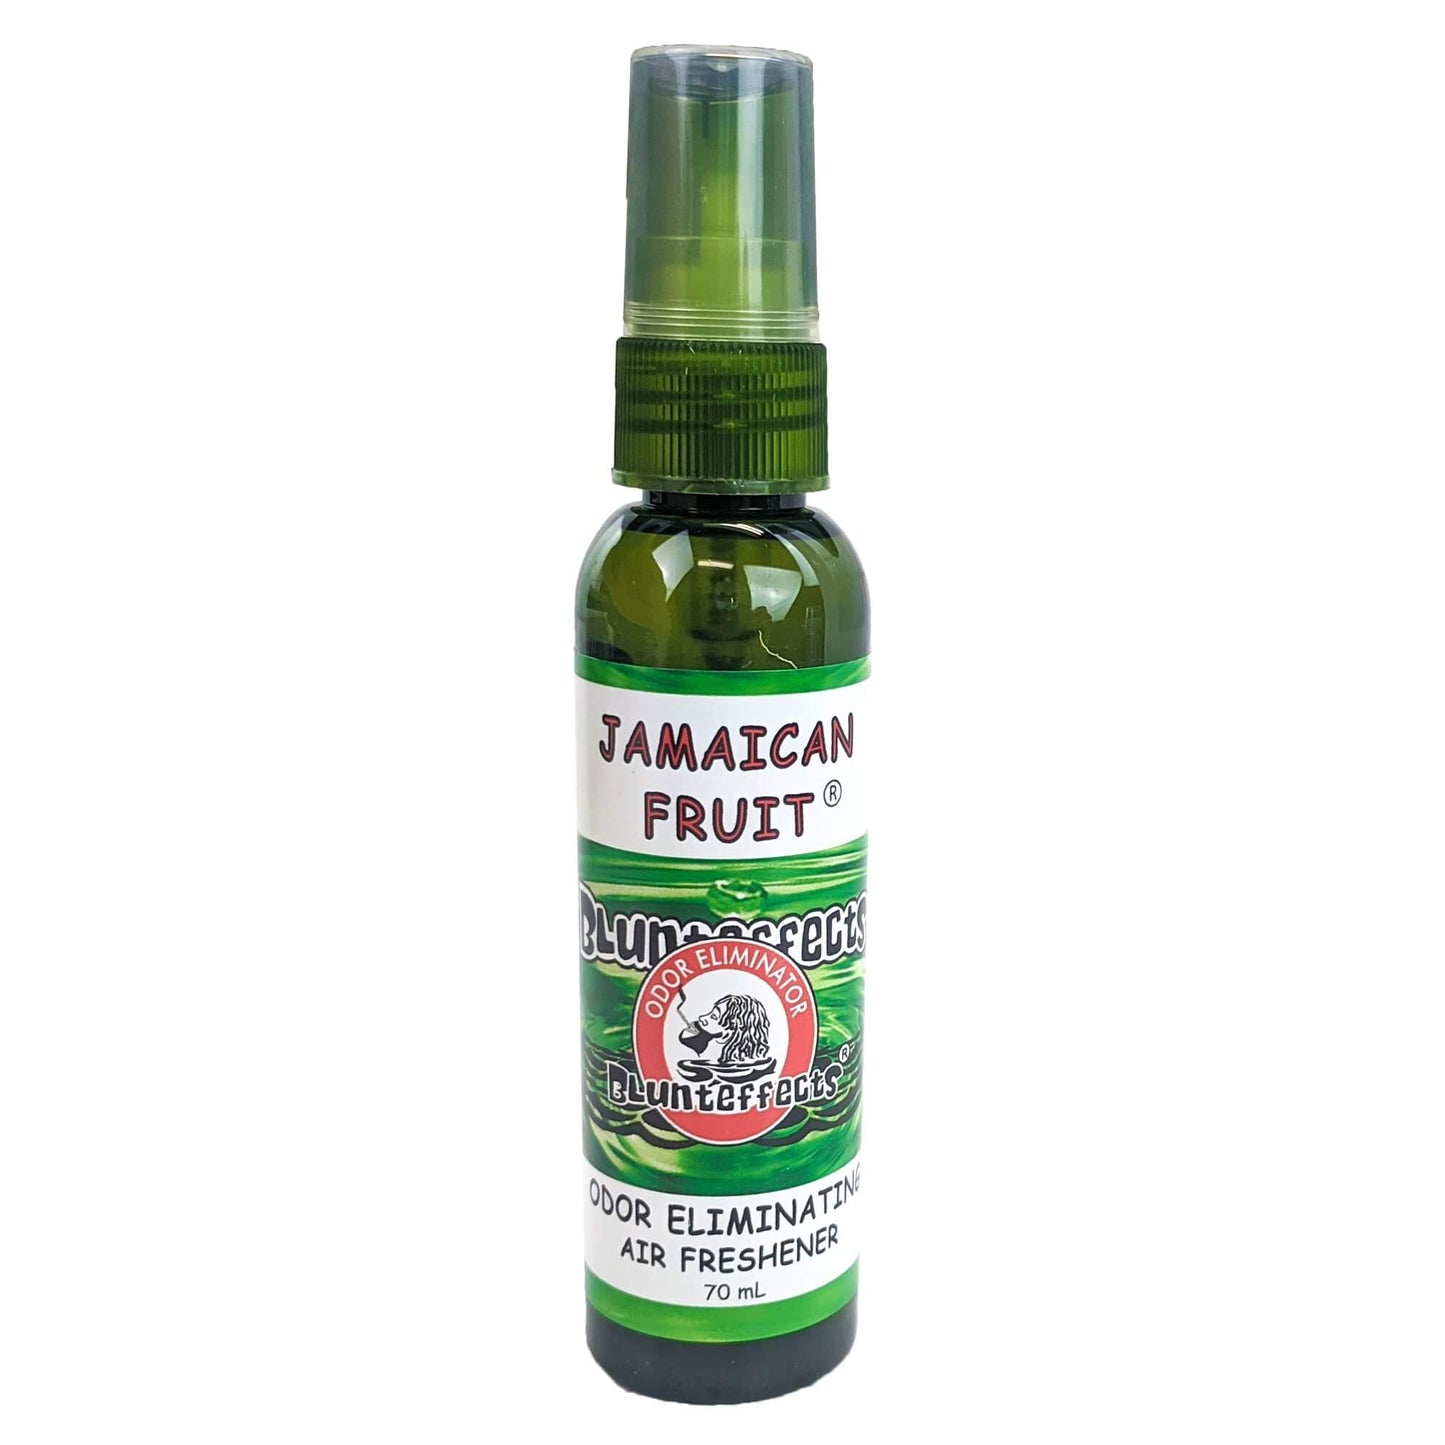 70ml Jamaican Fruit Scent BluntEffects Odor Eliminator Air Freshener Spray